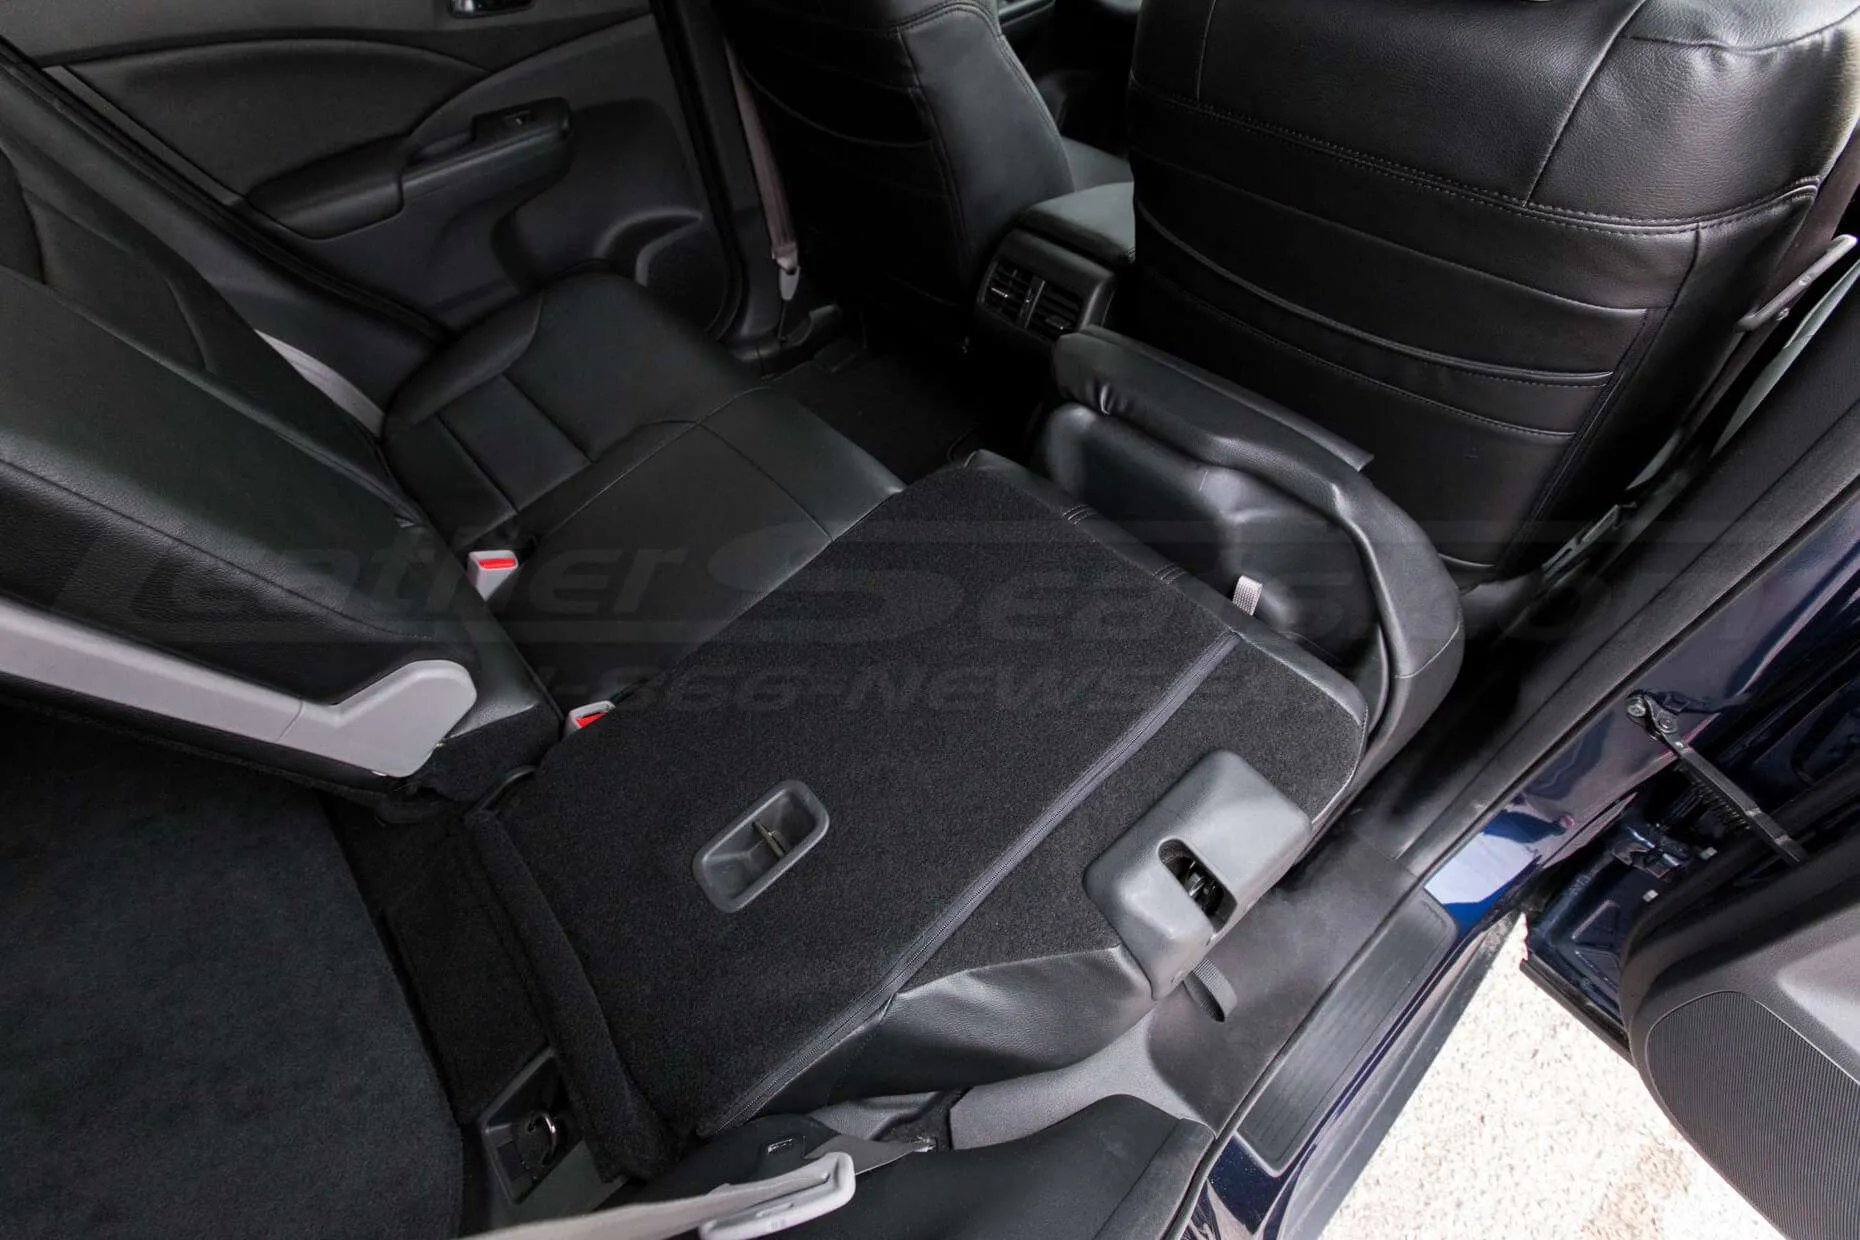 Honda CRV Leather Seat Kit - Black - Installed - Rear seat fold down